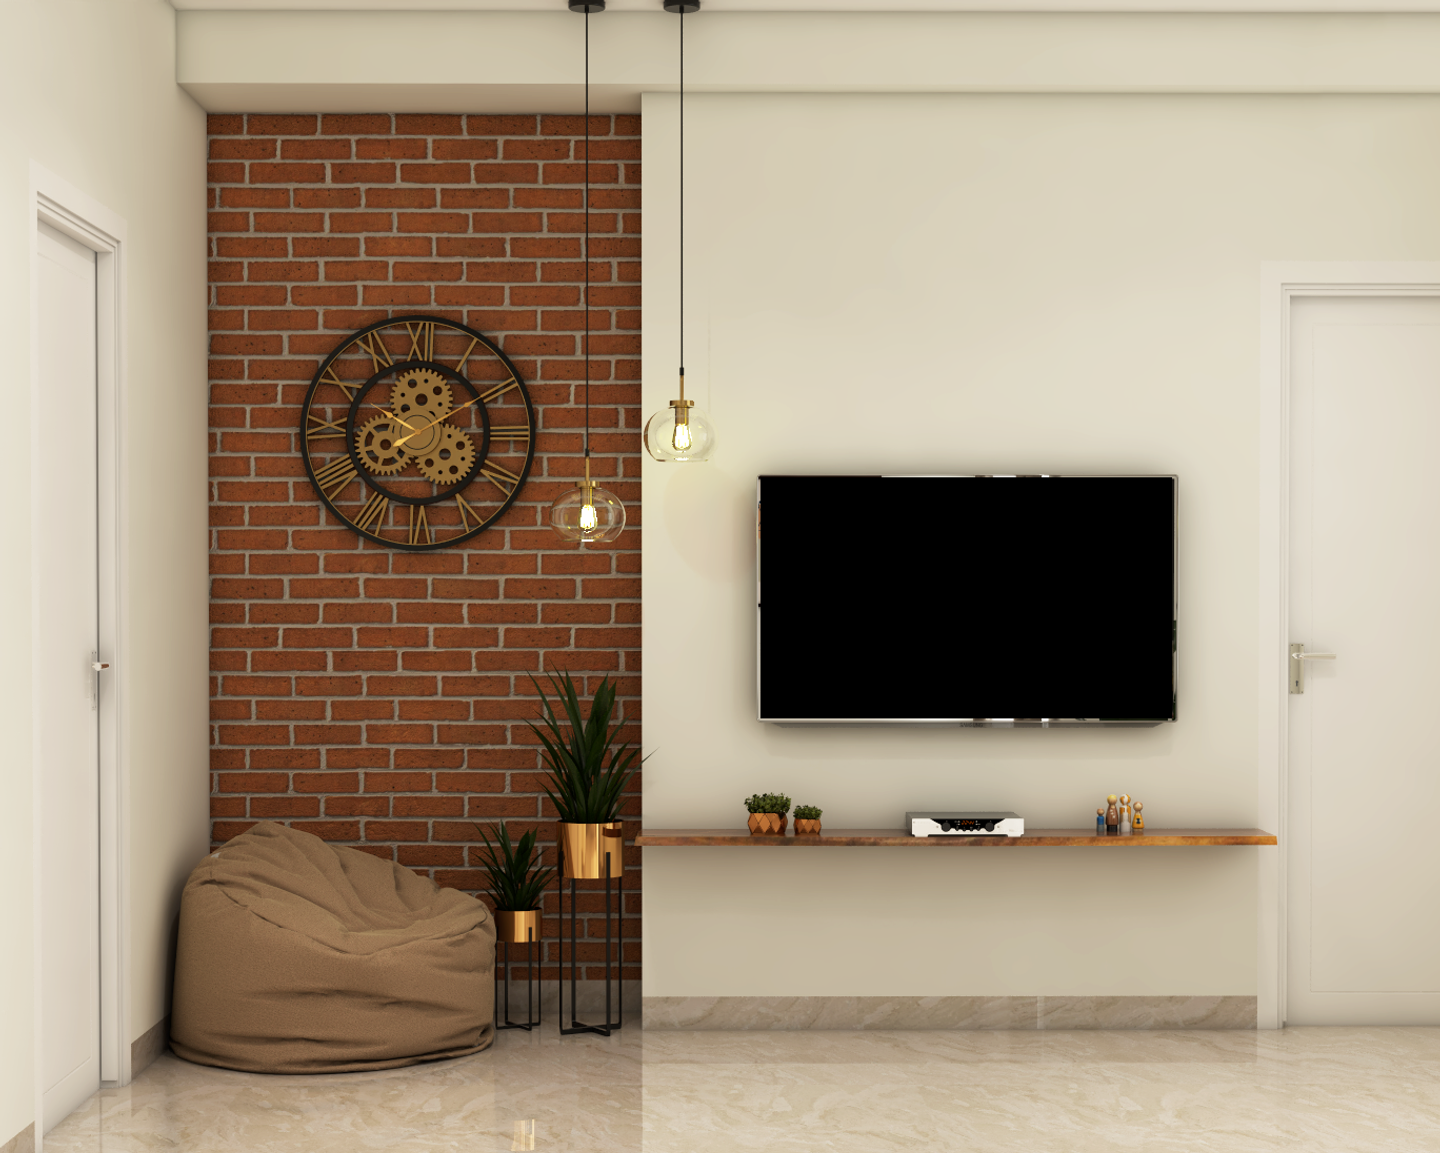 Modern TV Unit With Brick Wall - Livspace